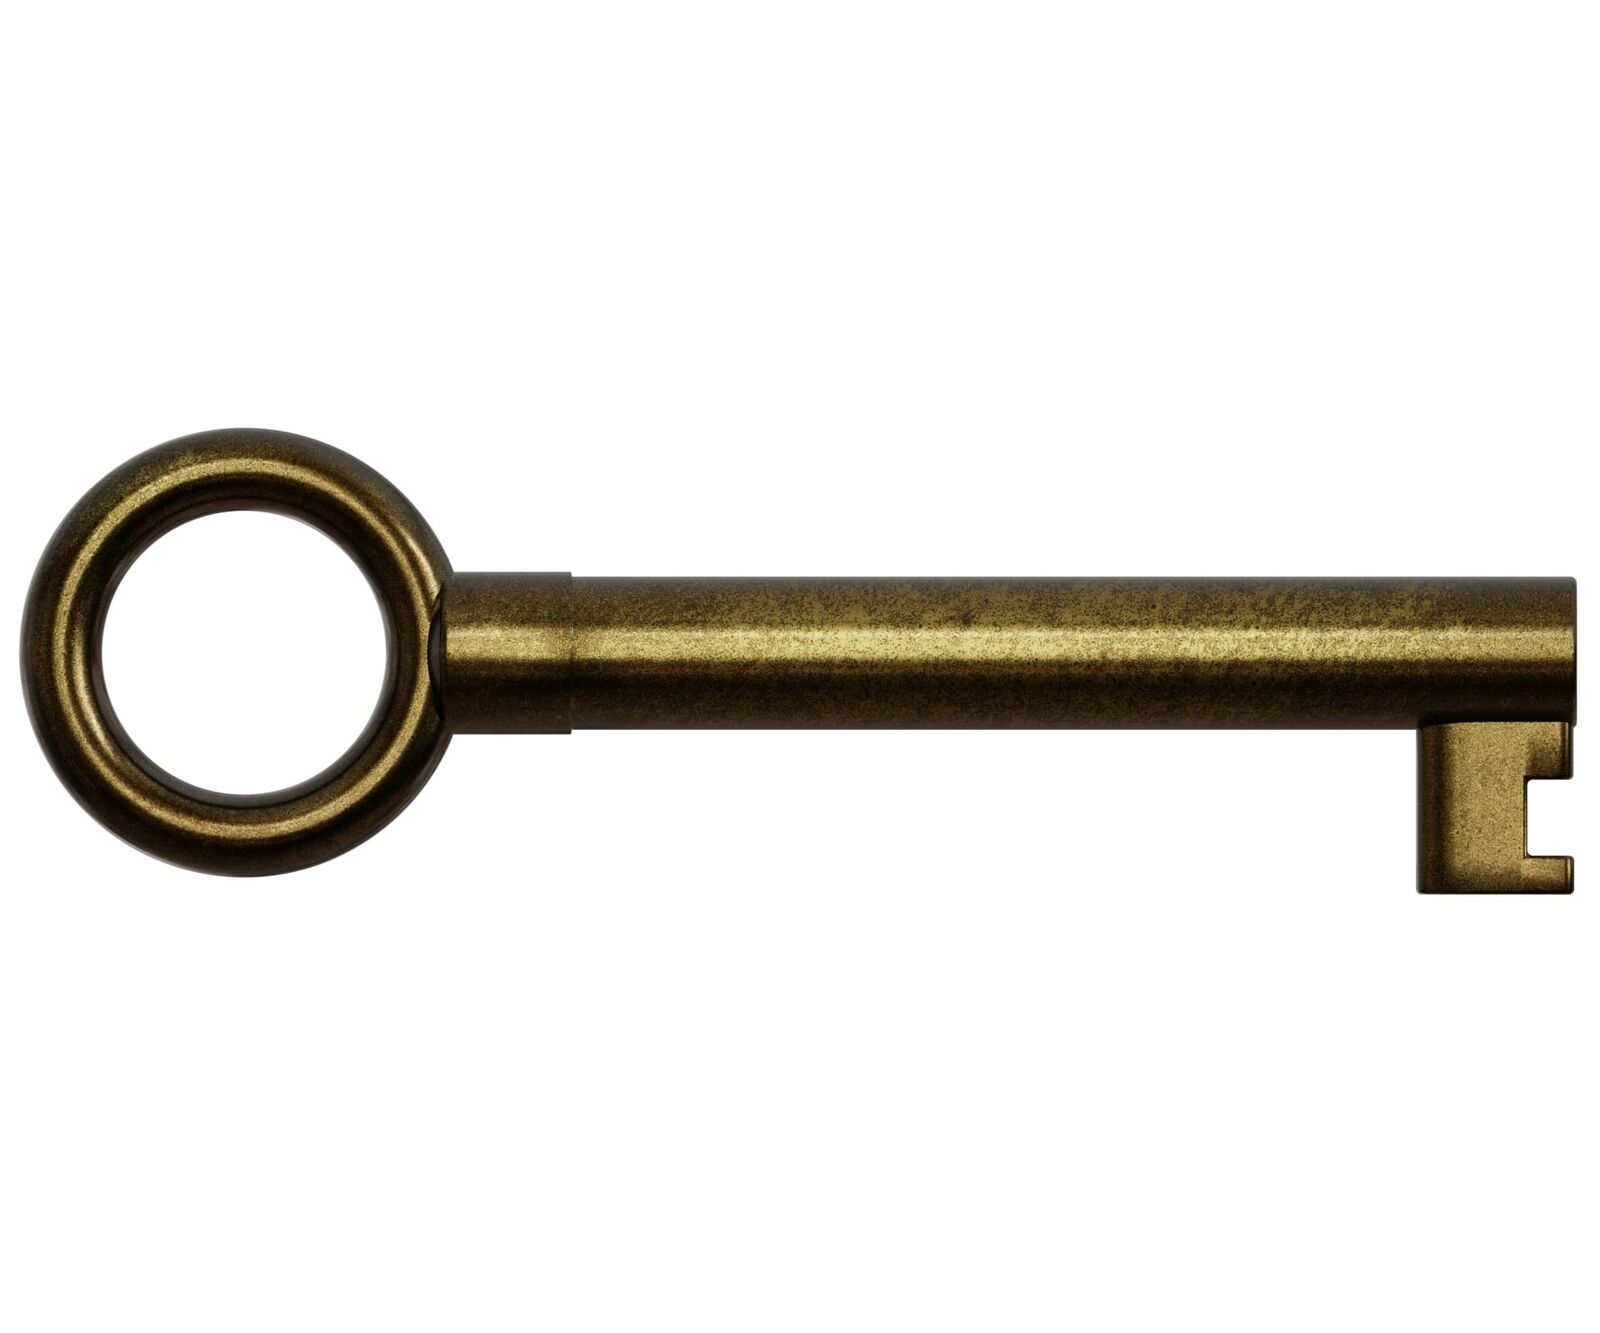 KY-13 Statutory Antique Brass Finish Hollow Barrel Skeleton Key